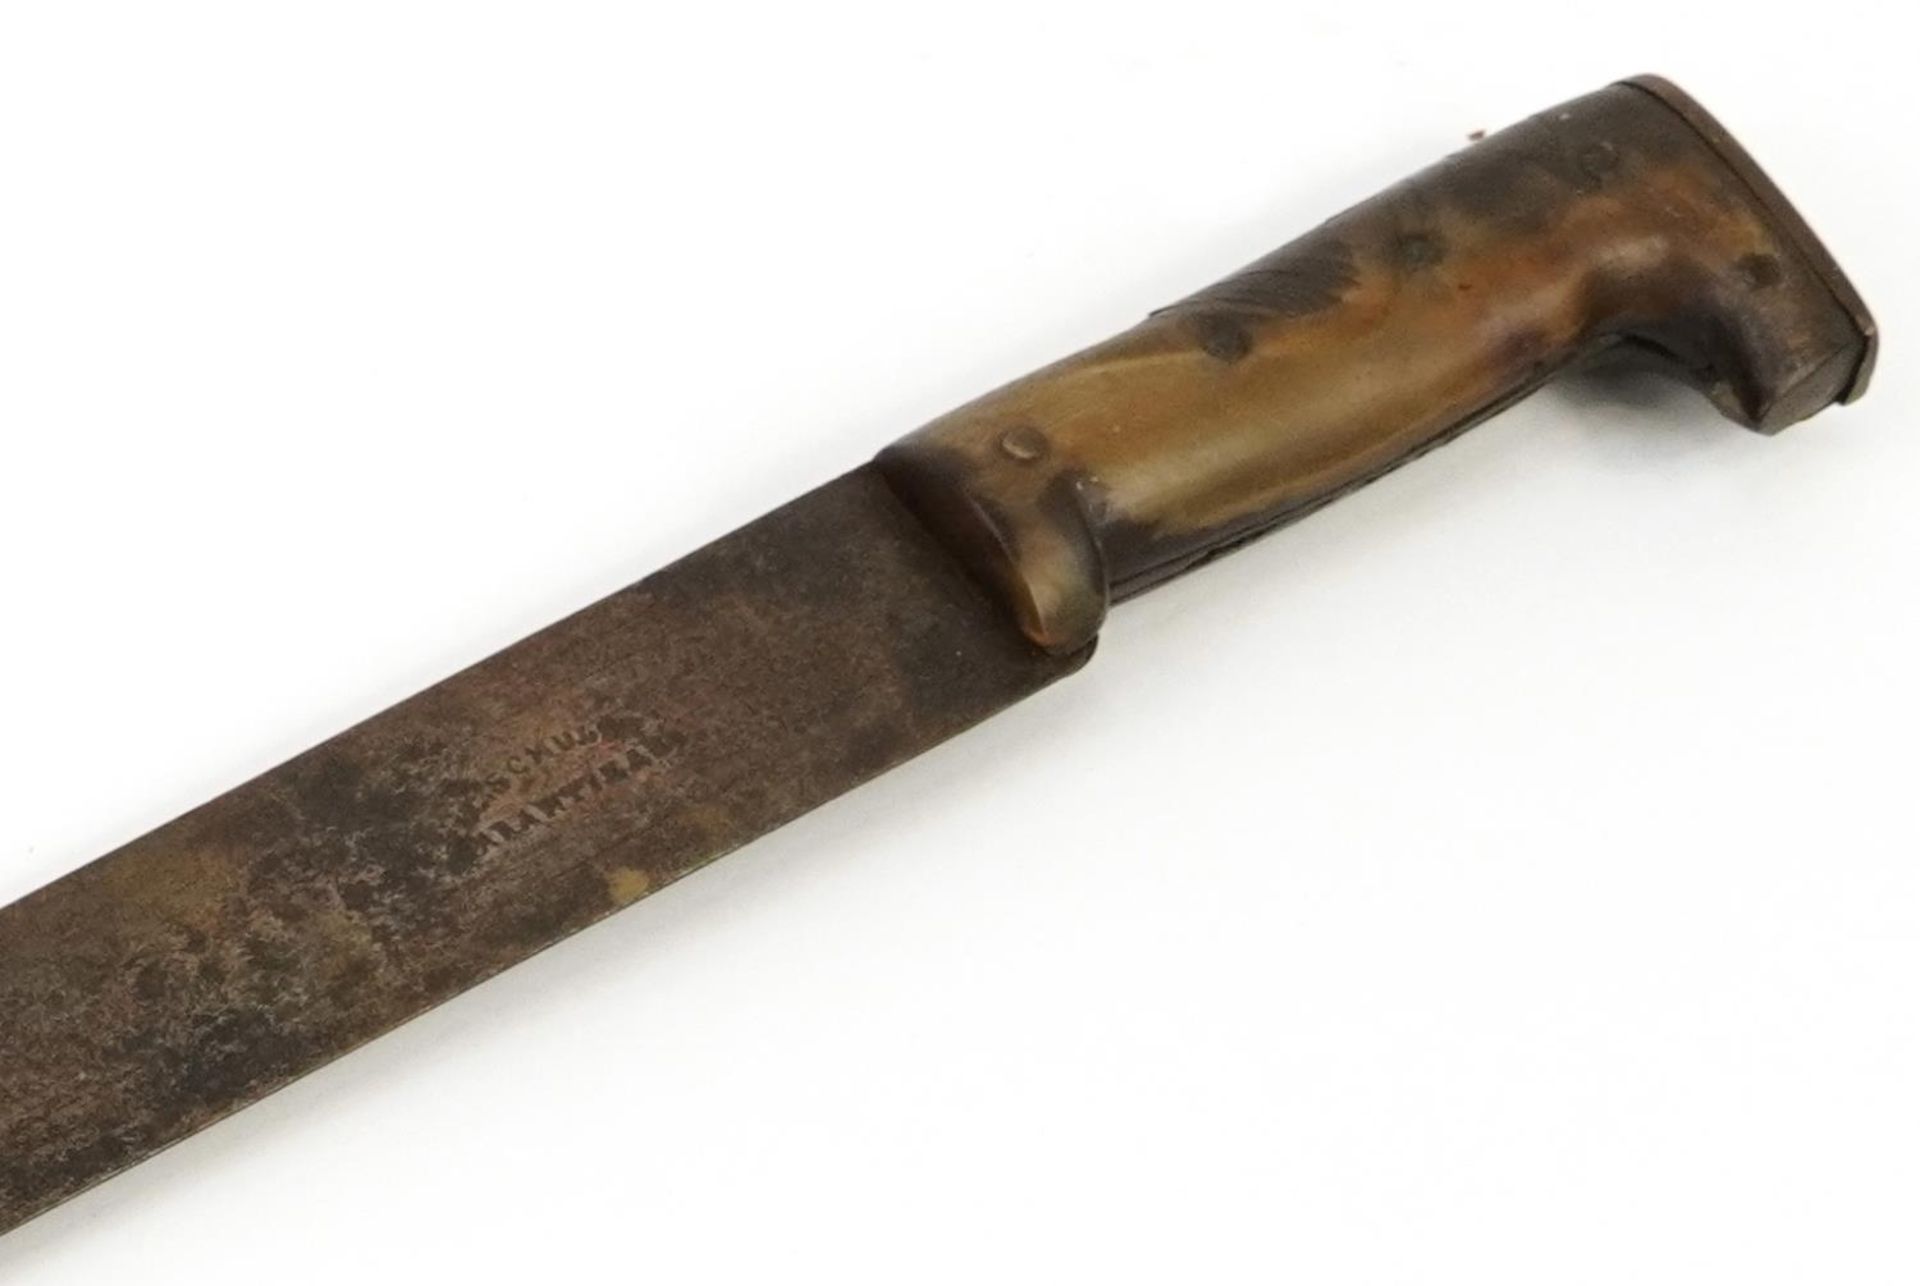 19th century European machete with horn handle and steel blade impressed F C Schulte Garantieado,